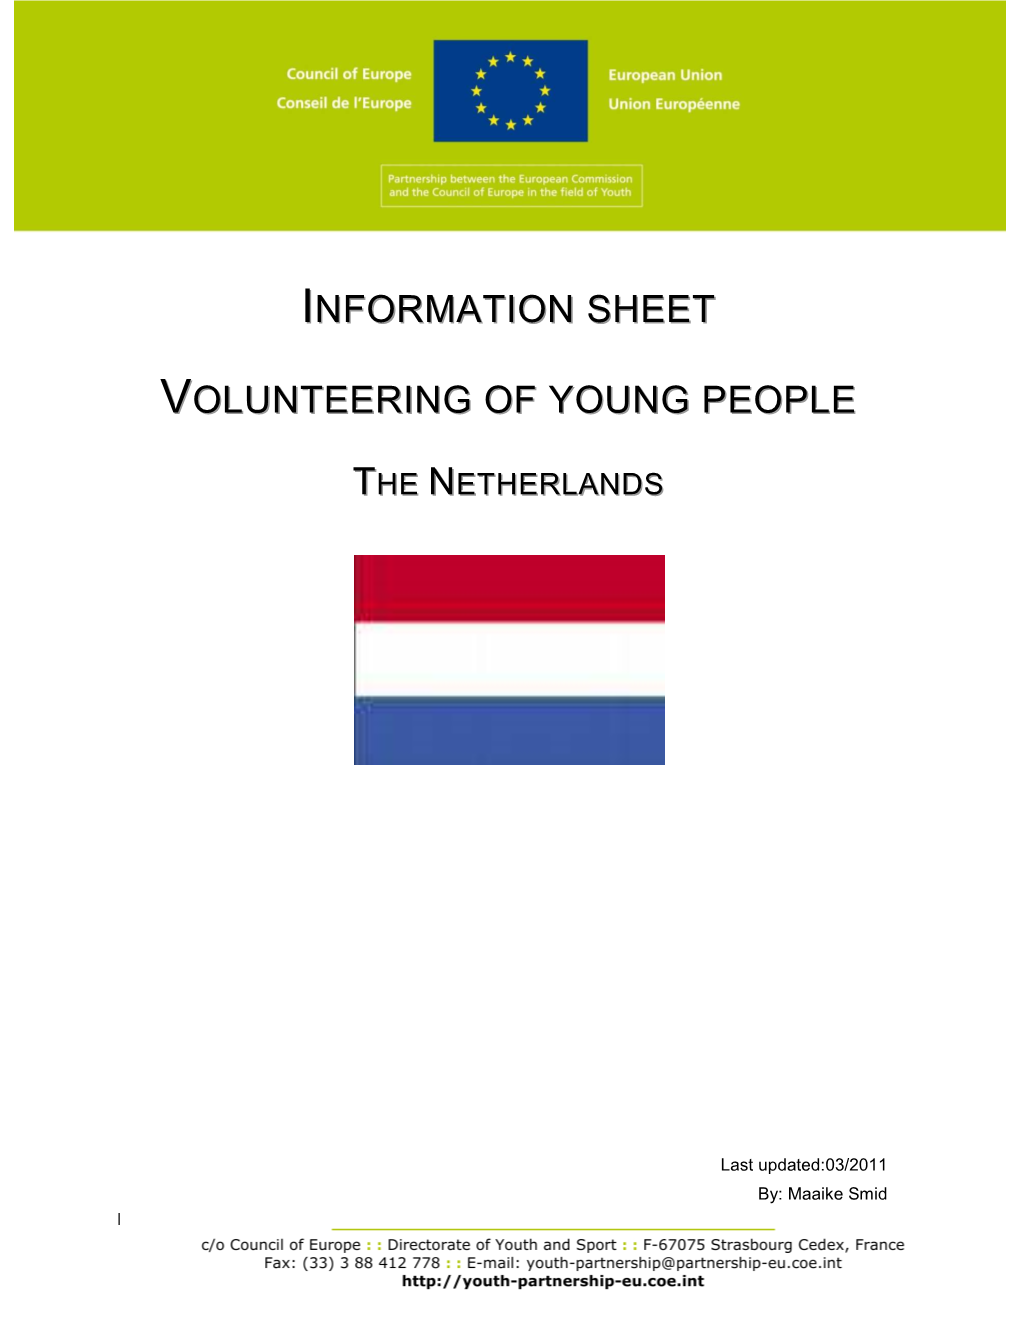 Information Sheet Volunteering of Young People